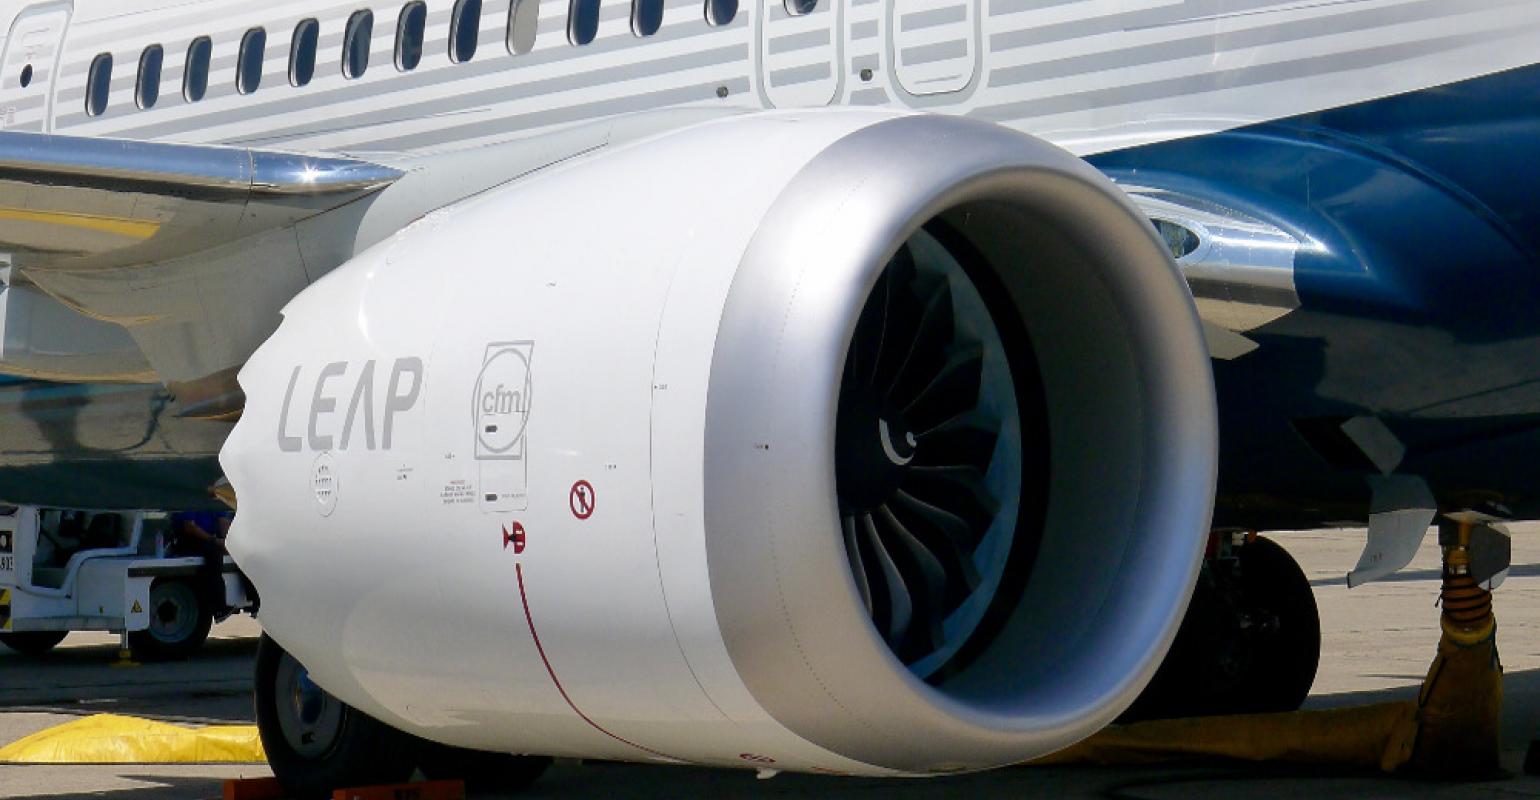 cfm leap发动机作为空客a320neo系列和波音737 max系列的发动机,分为